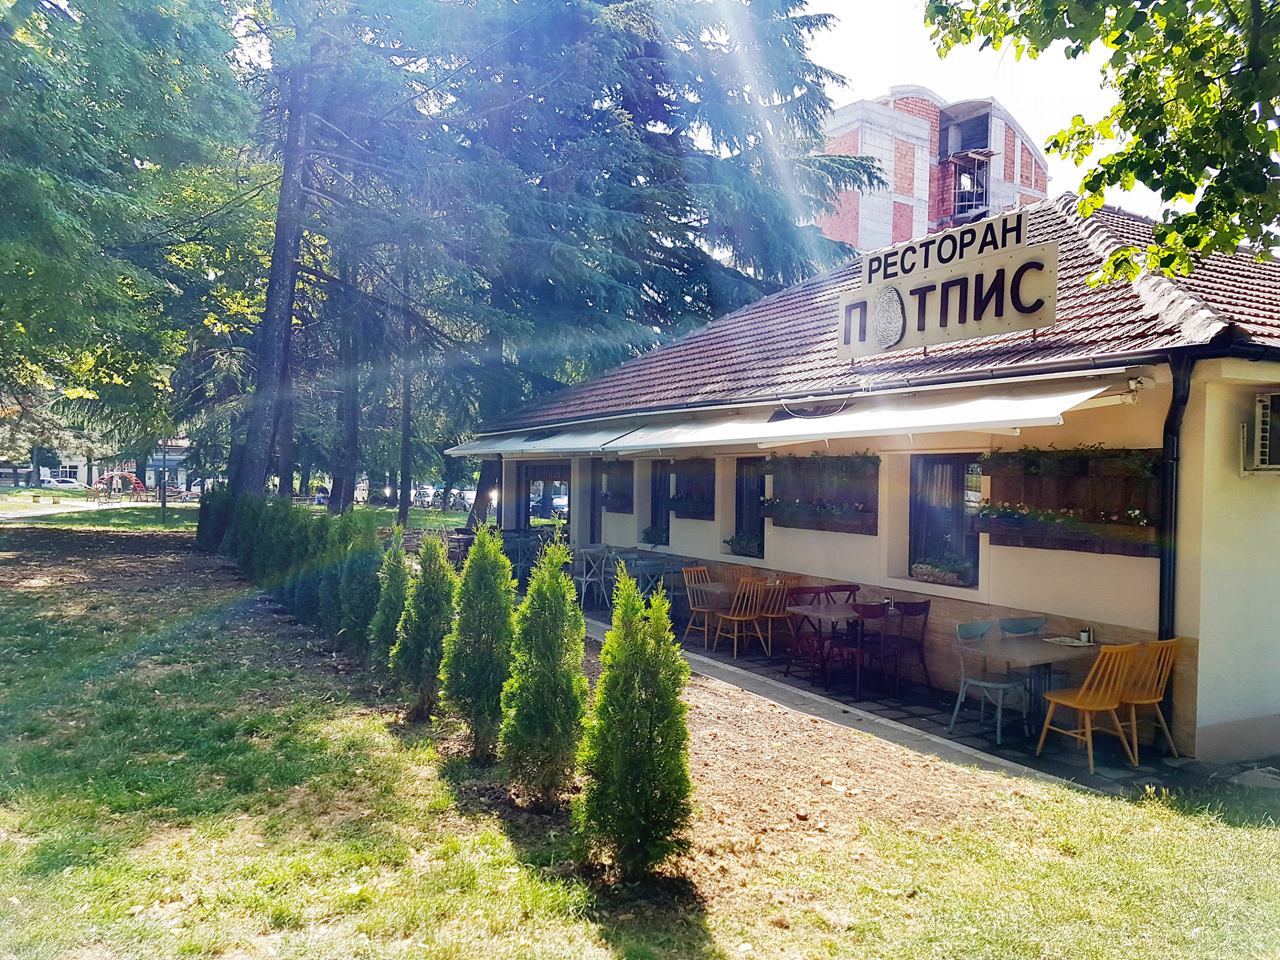 POTPIS RESTORAN Restorani Beograd - Slika 2